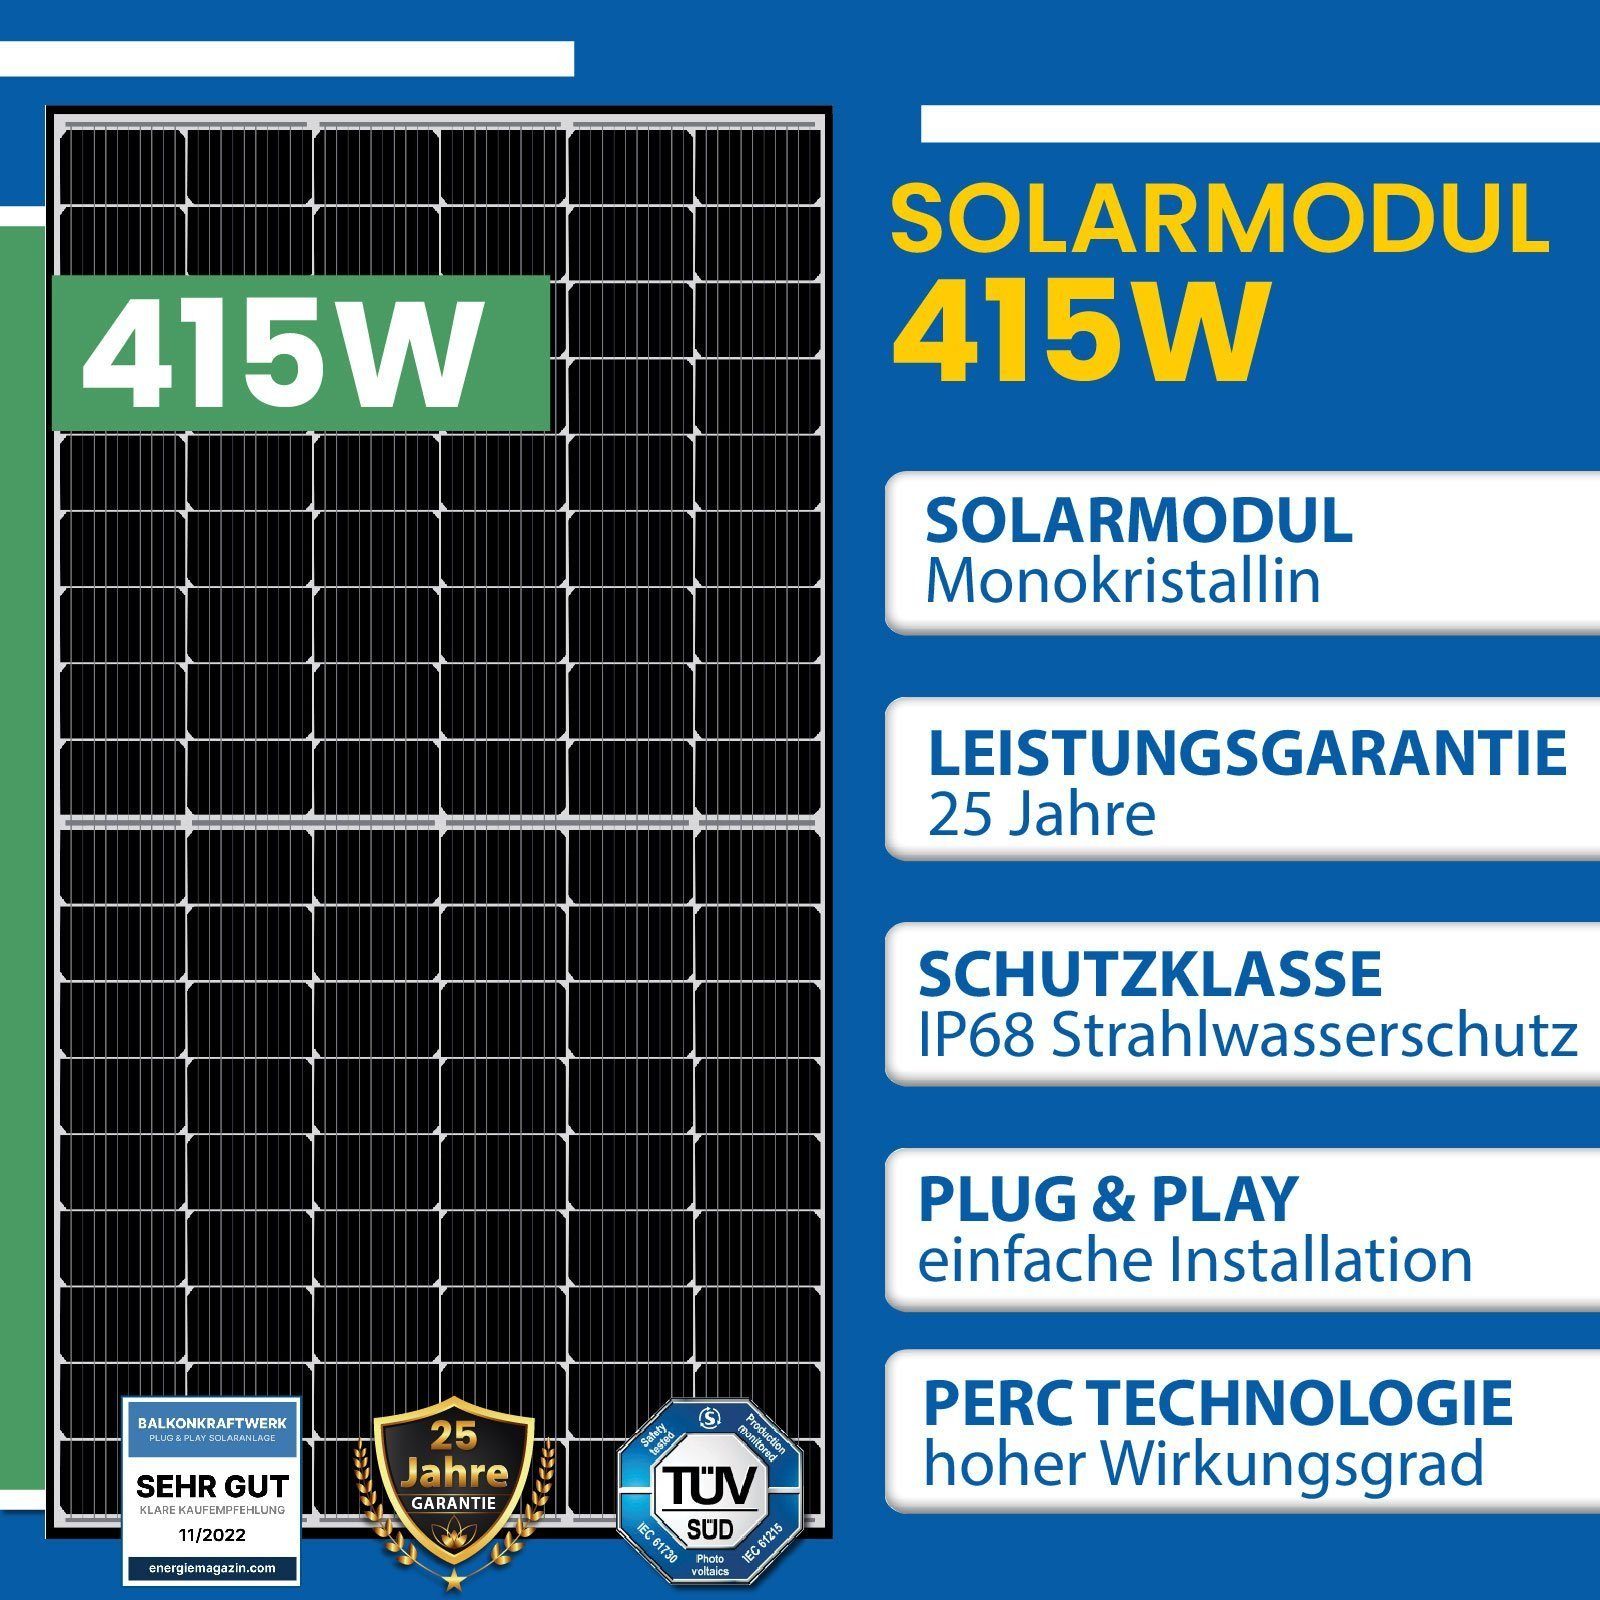 Photovoltaik Schwarz HIEFF M10 Stegpearl monokristalline Solarmodul 2x415W Solaranlage